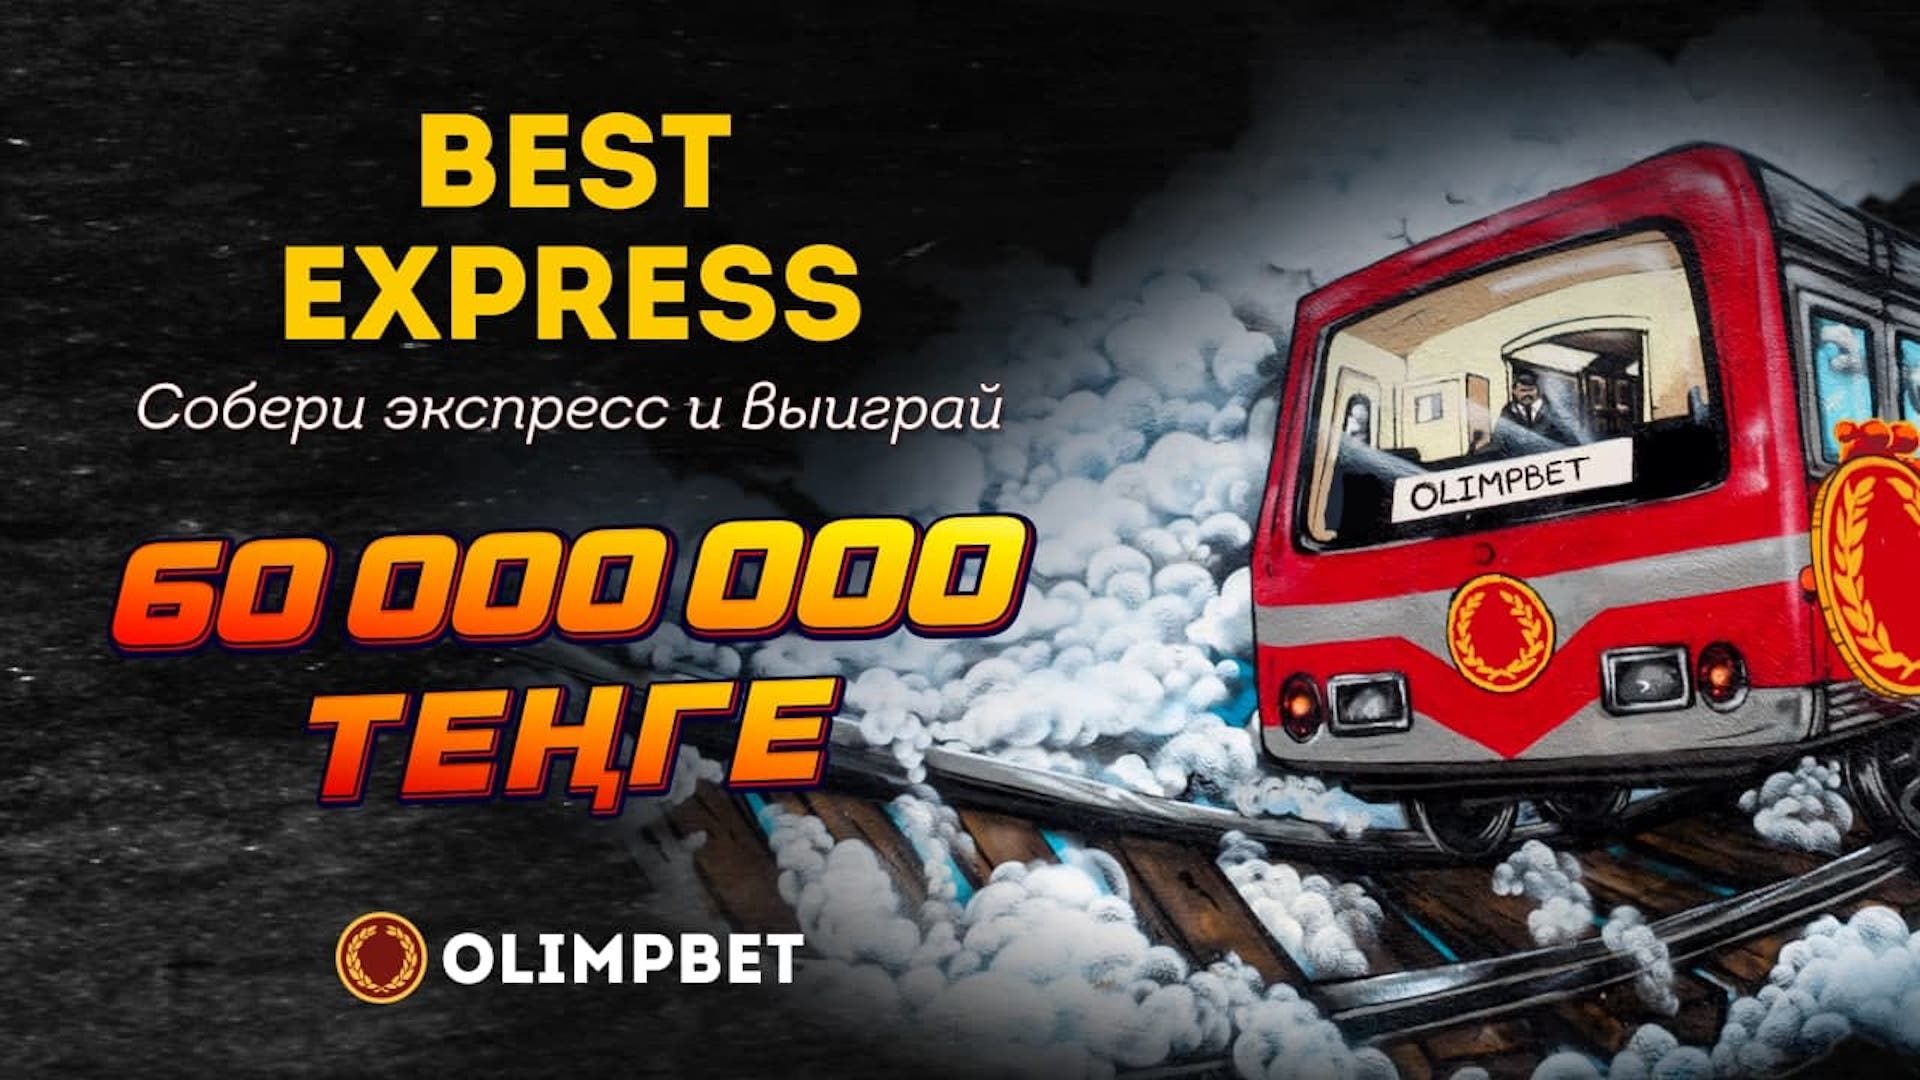 Olimpbet запускает акцию Best Express и разыграет 60000000 тенге